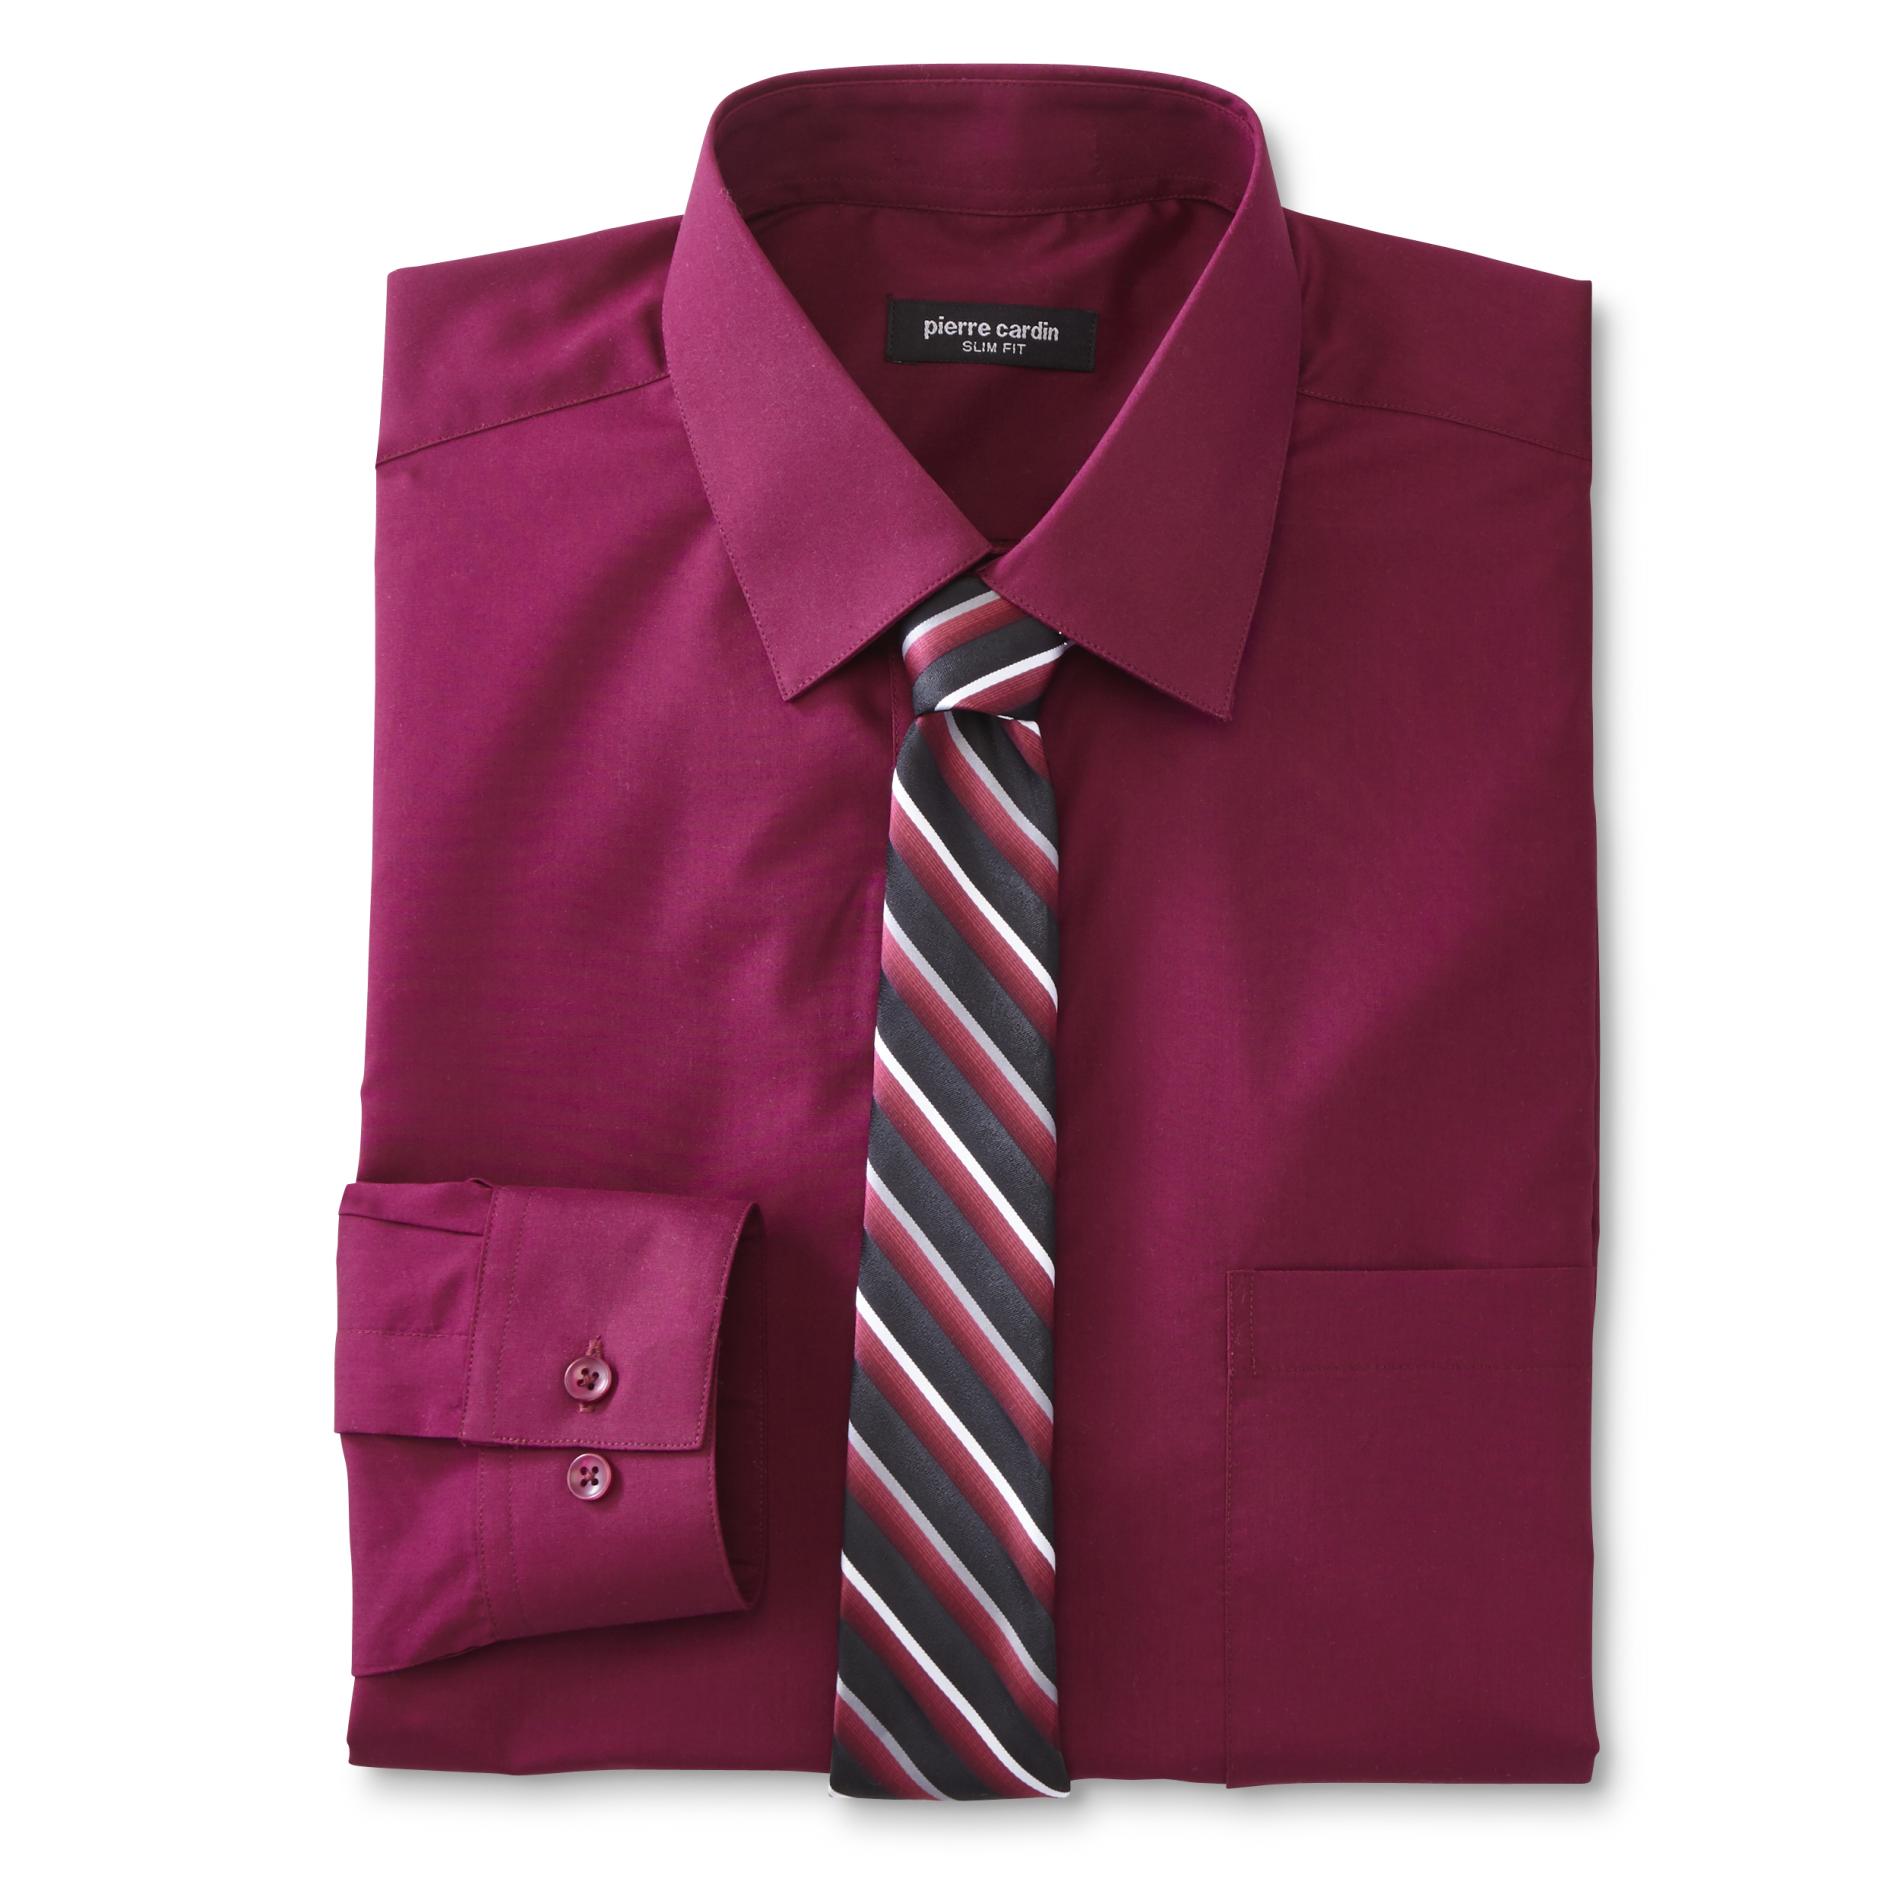 Pierre Cardin Men's Dress Shirt & Necktie - Striped